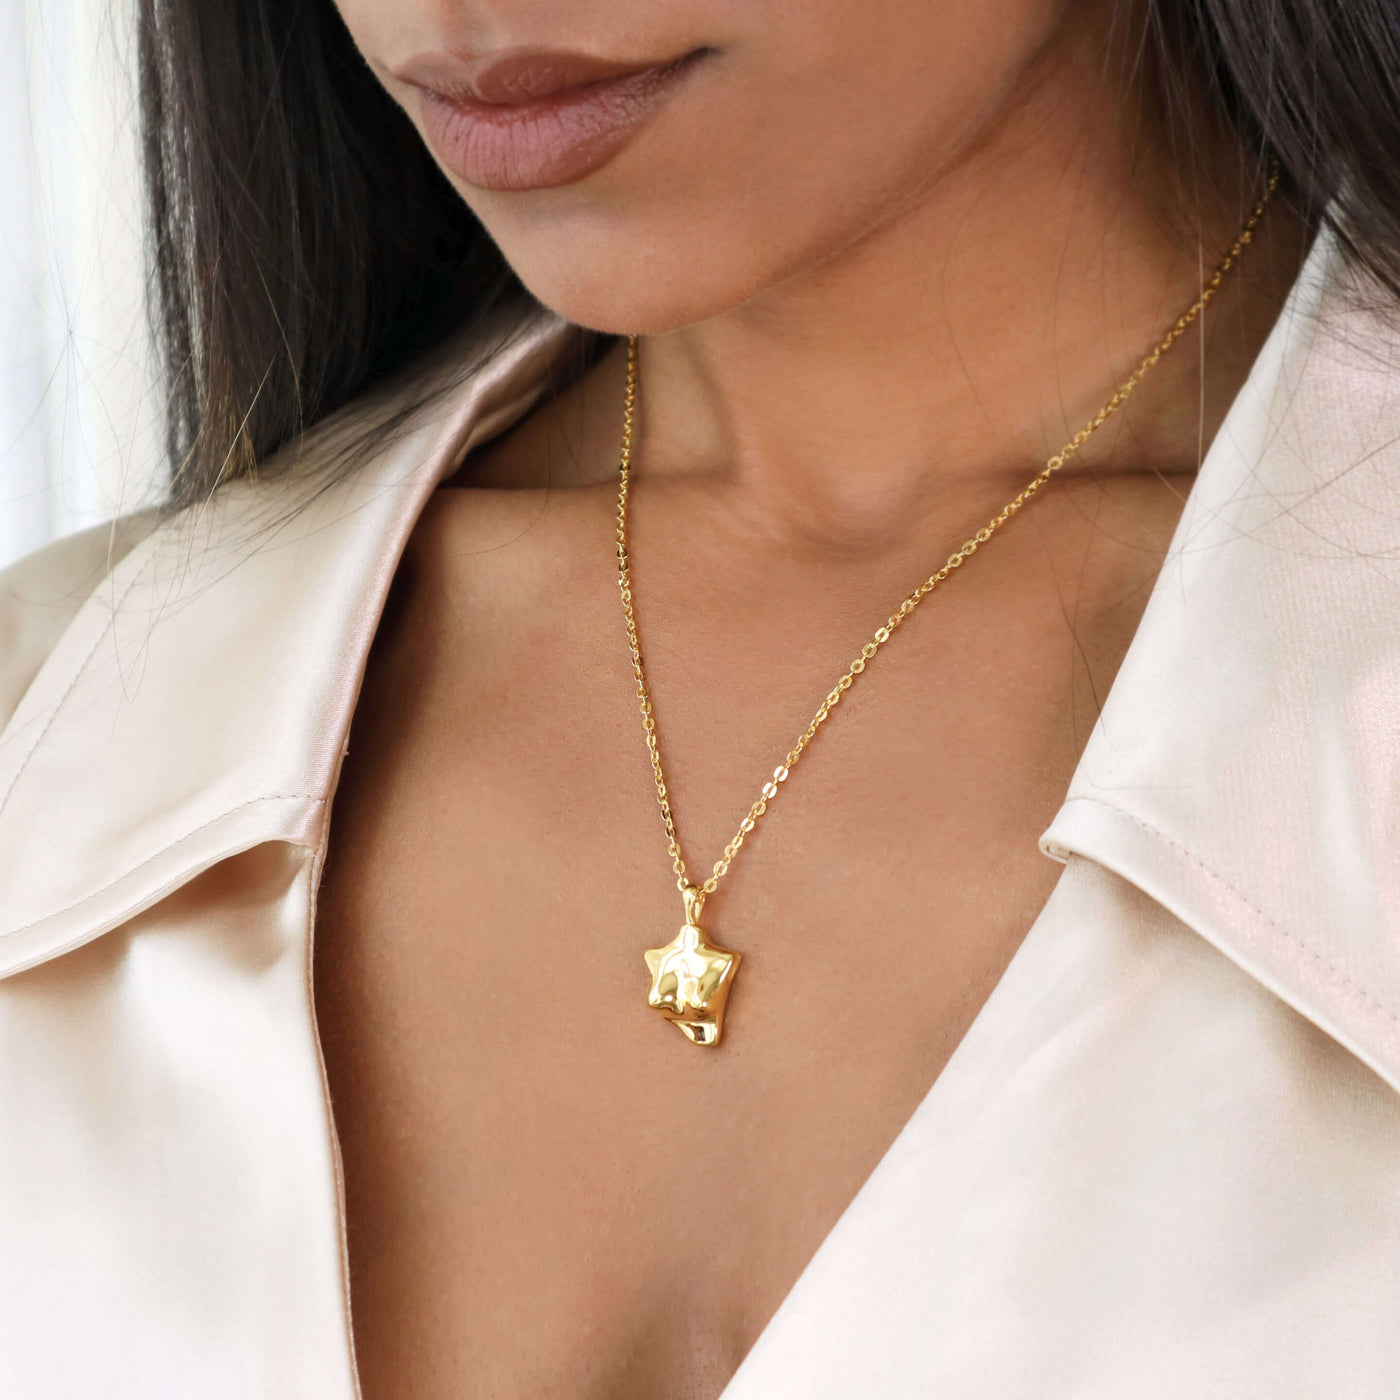 Female woman body gold pendant necklace, Rani & Co. jewellery uk